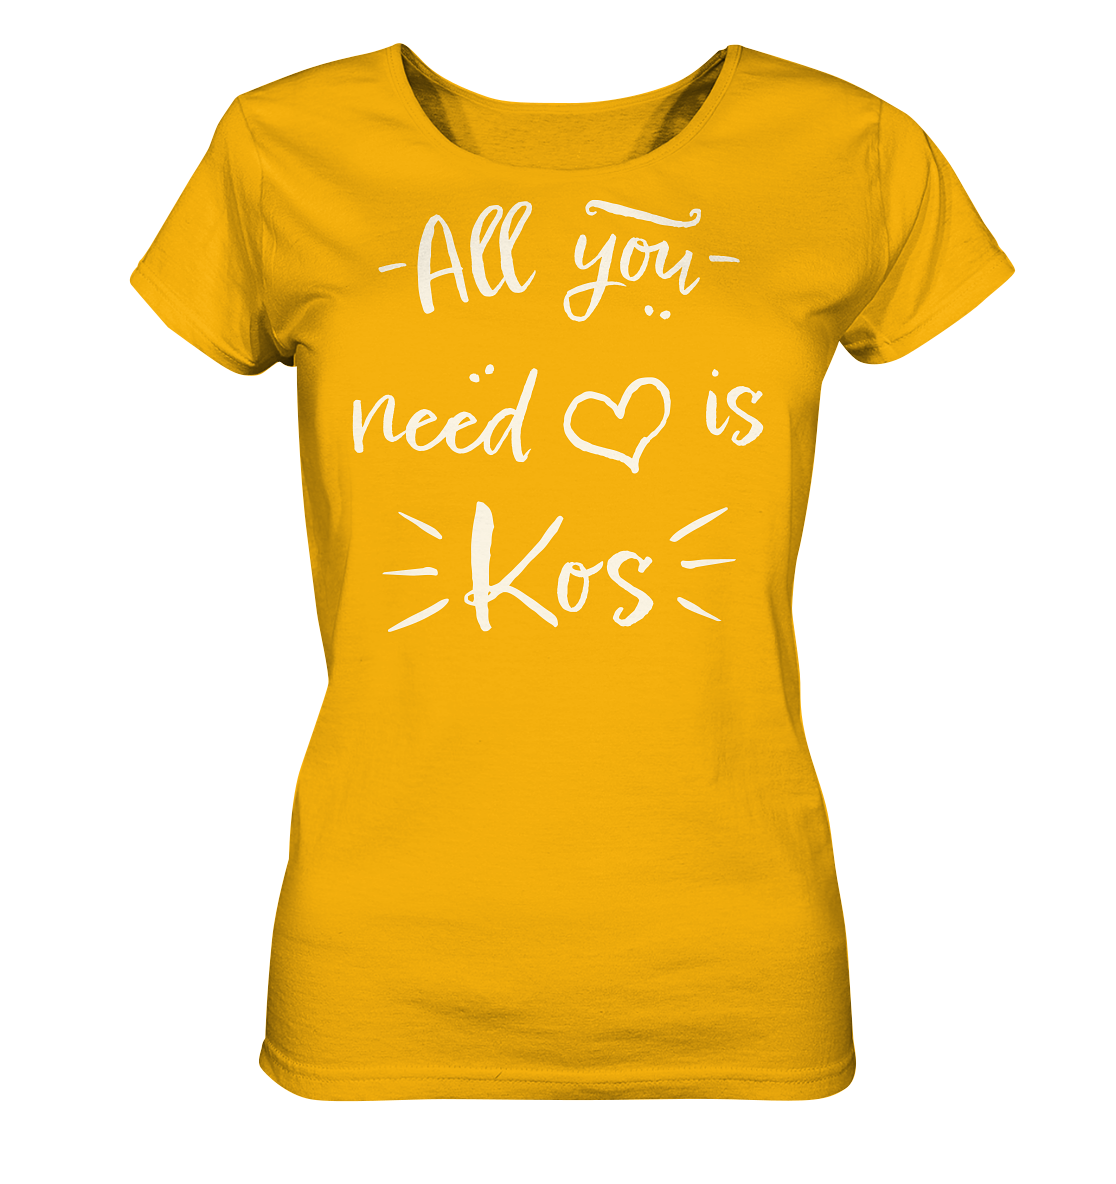 All you need is Kos - Ladies Organic Shirt